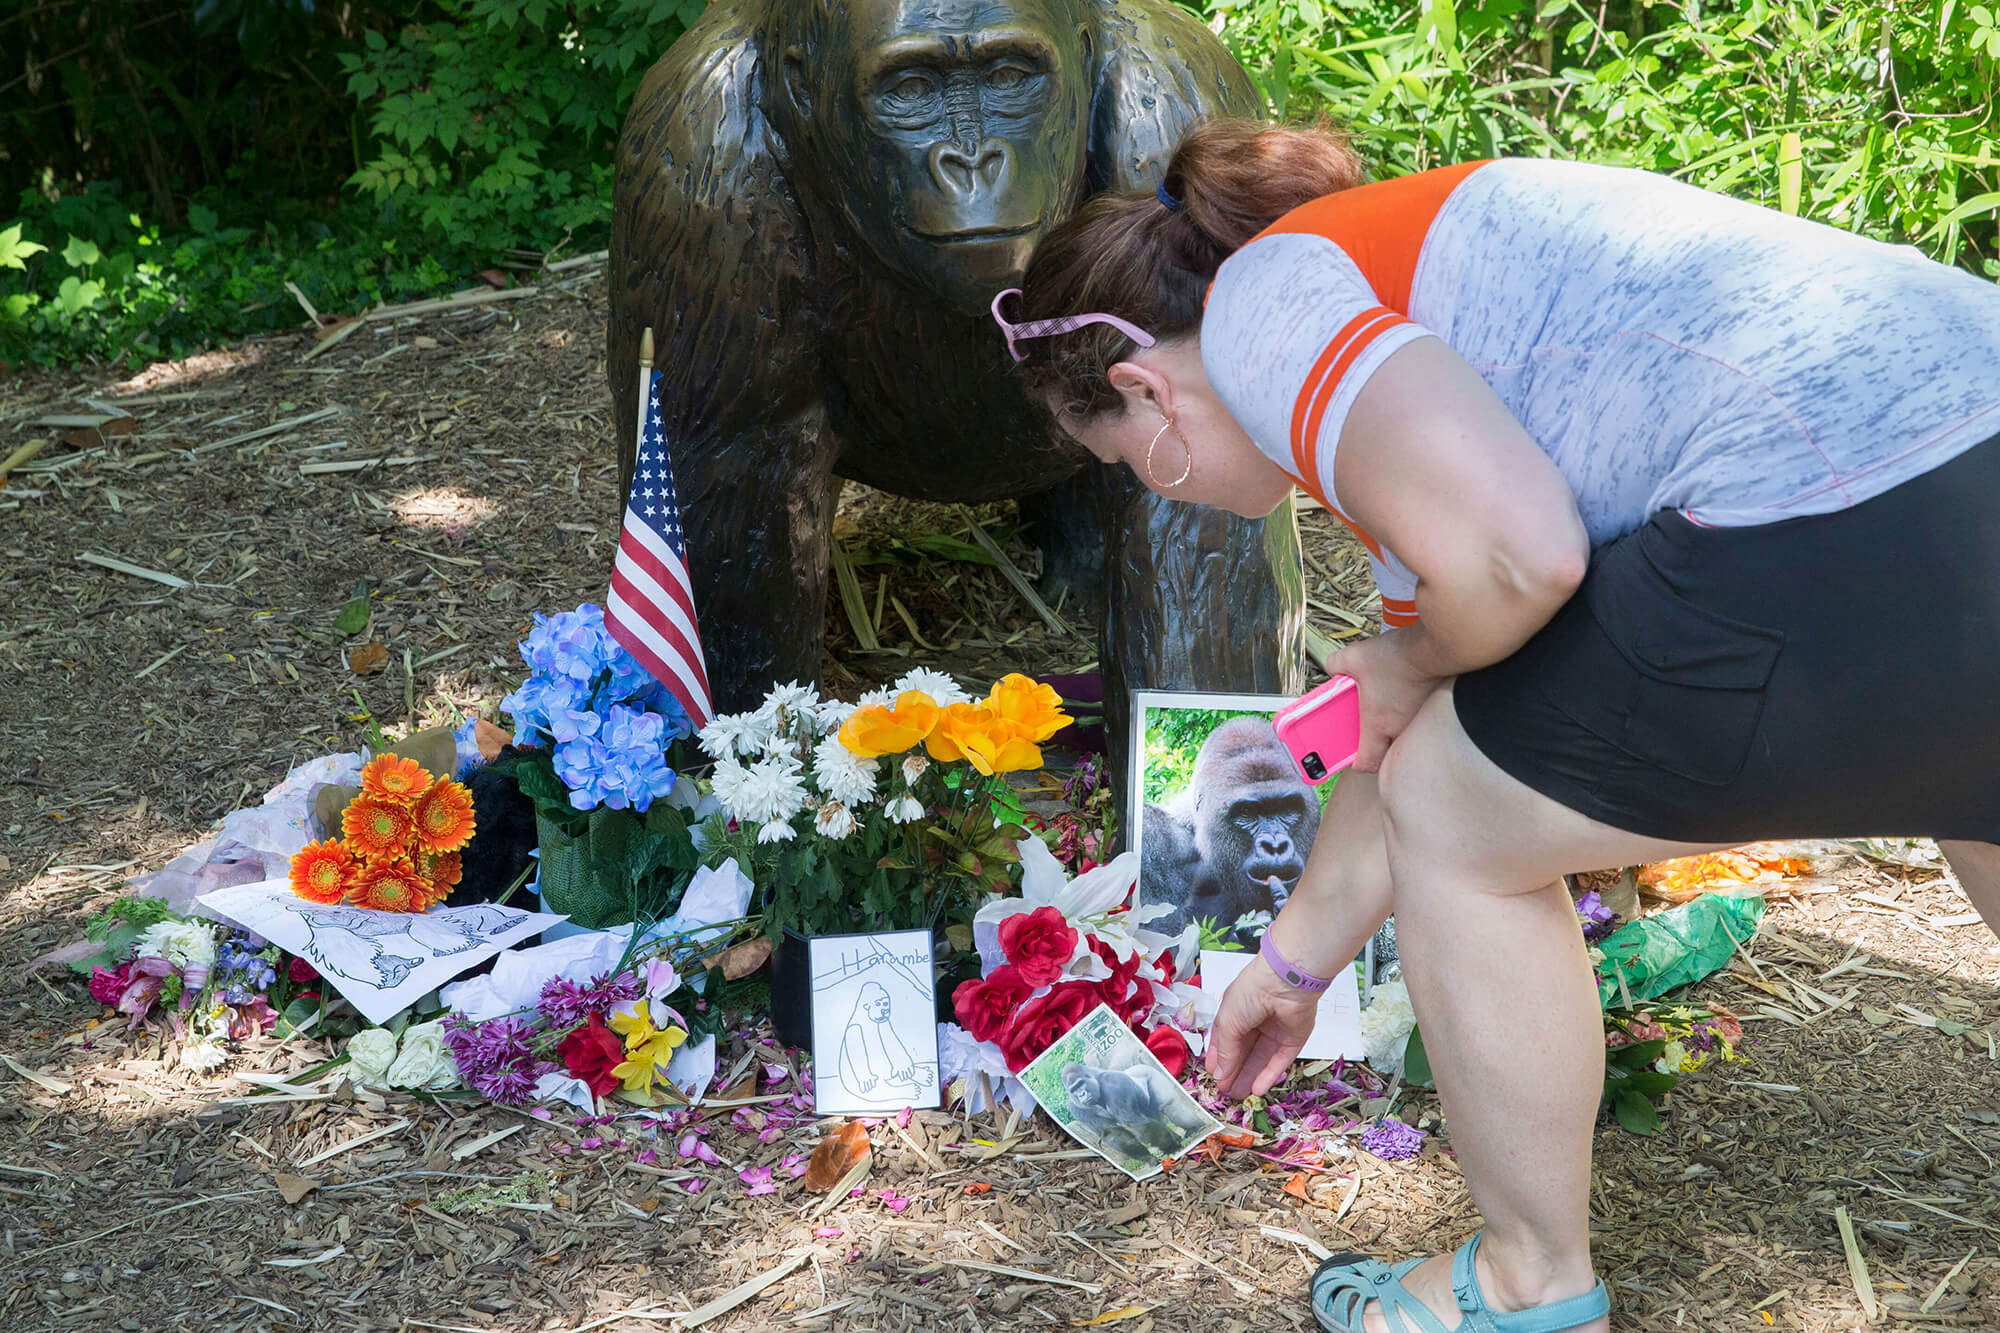 Image of memorial to Harambe the gorilla